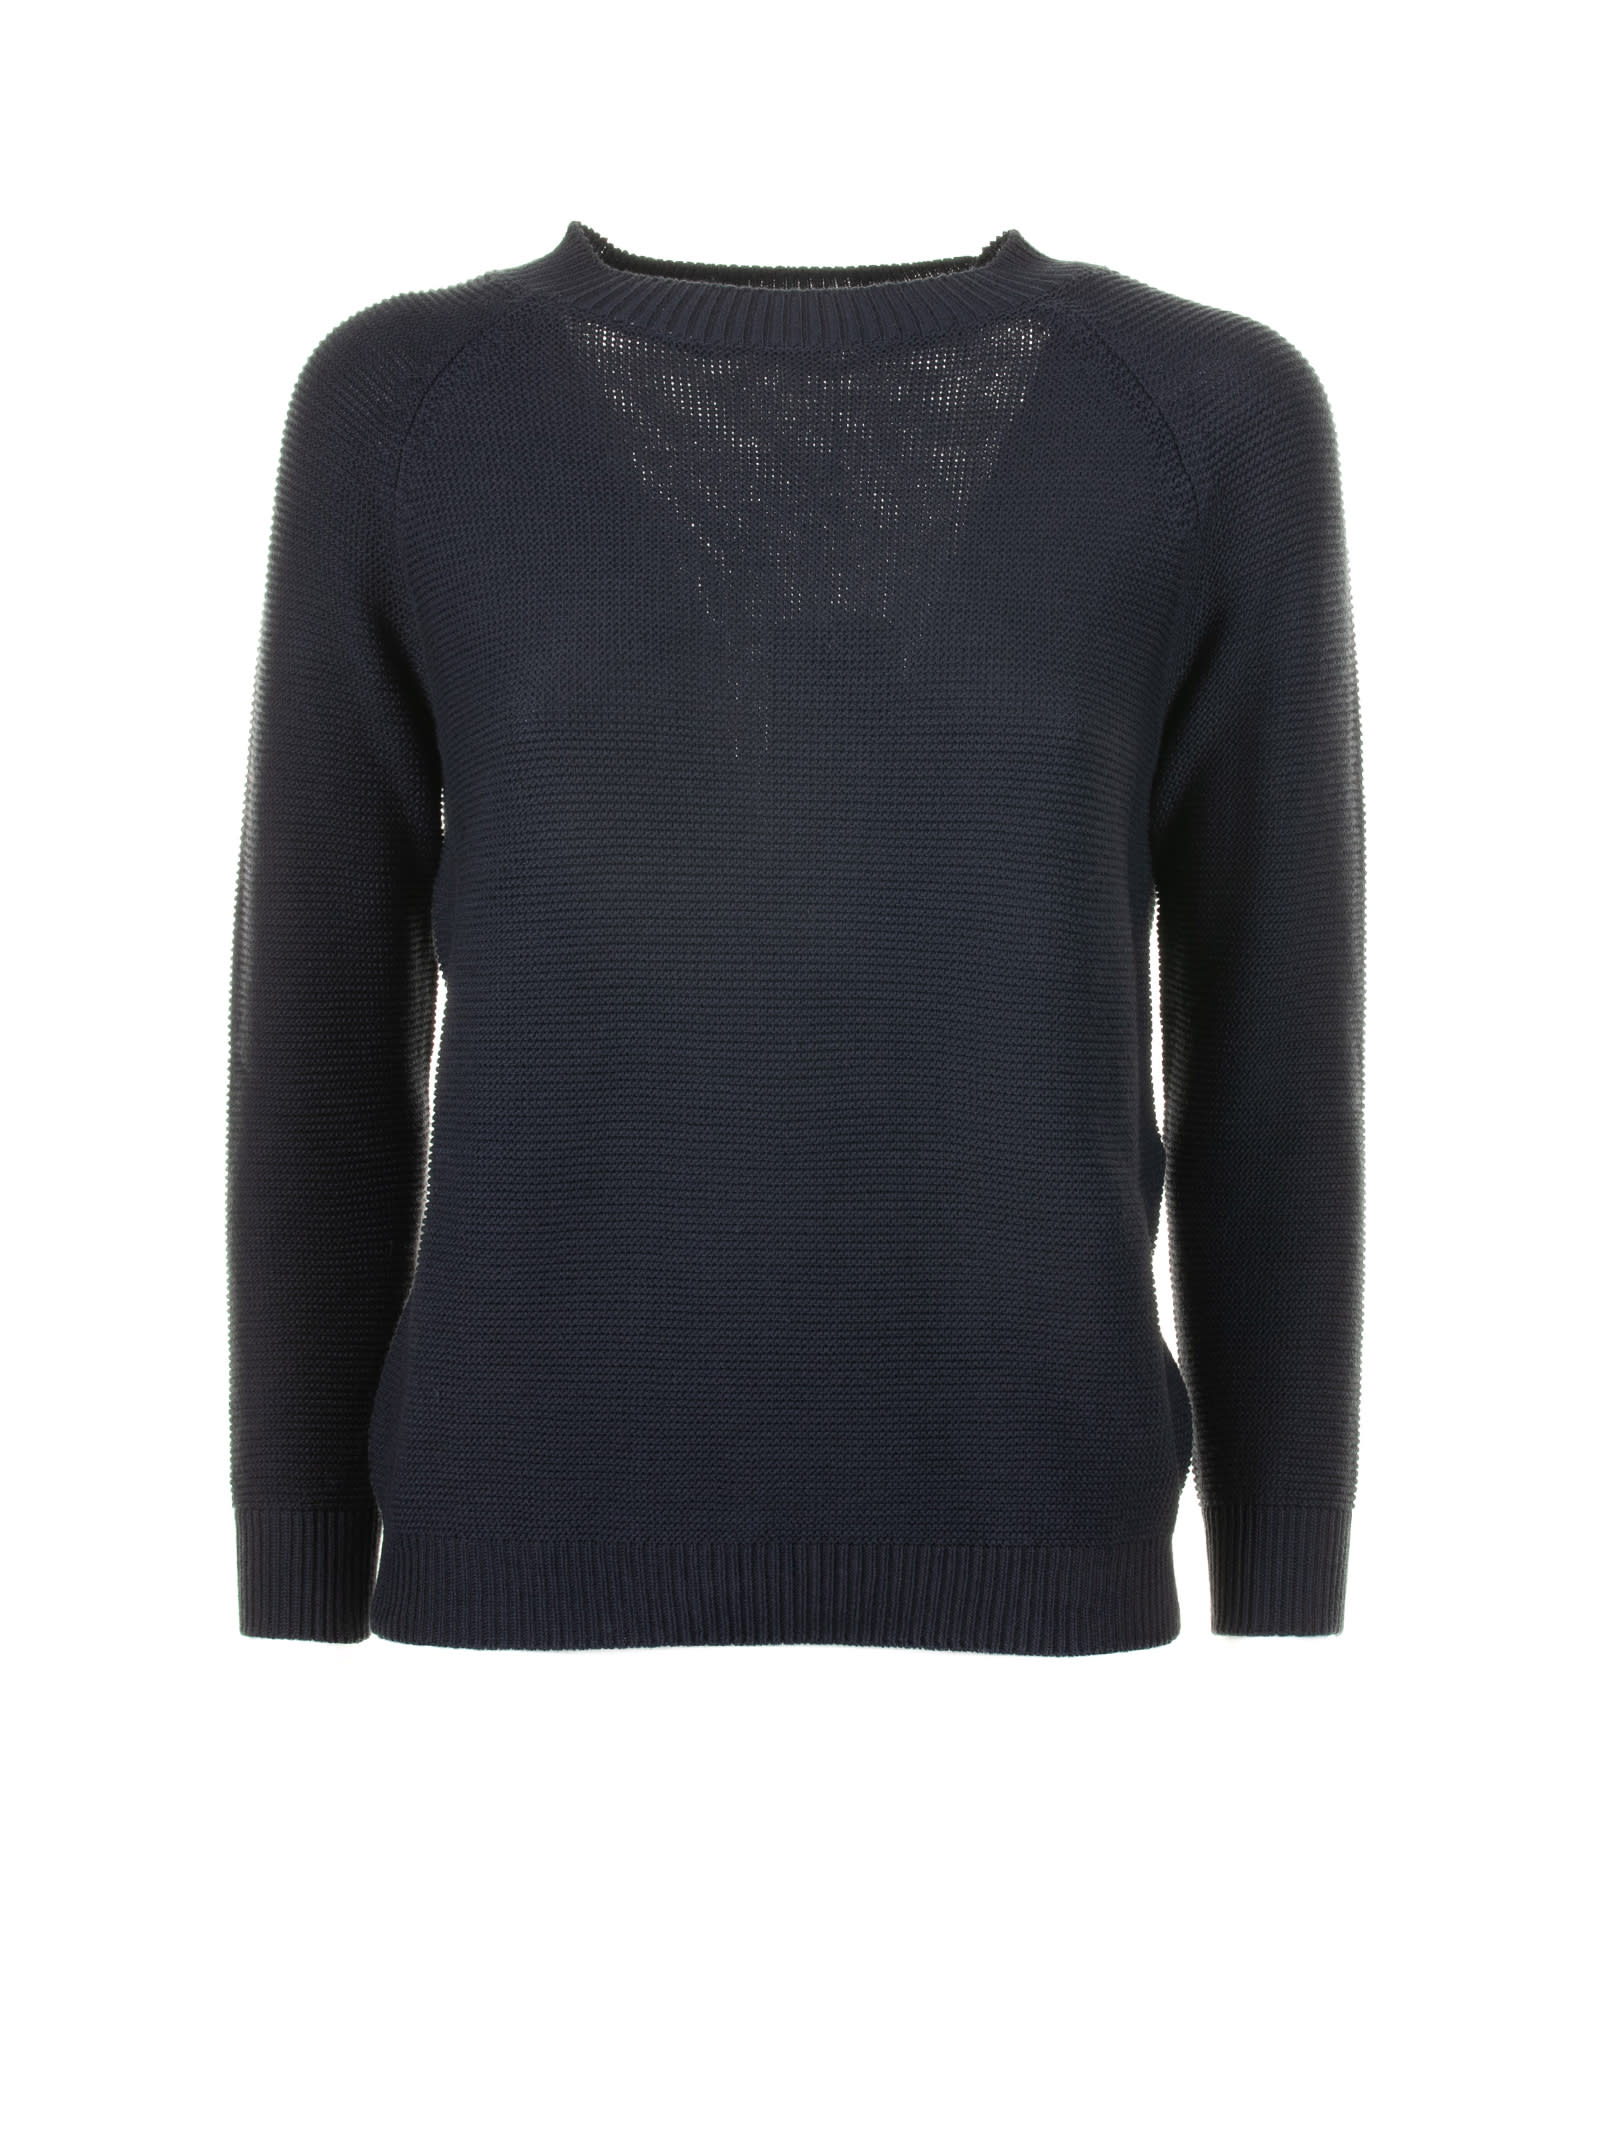 Shop Weekend Max Mara Soft Navy Blue Cotton Sweater